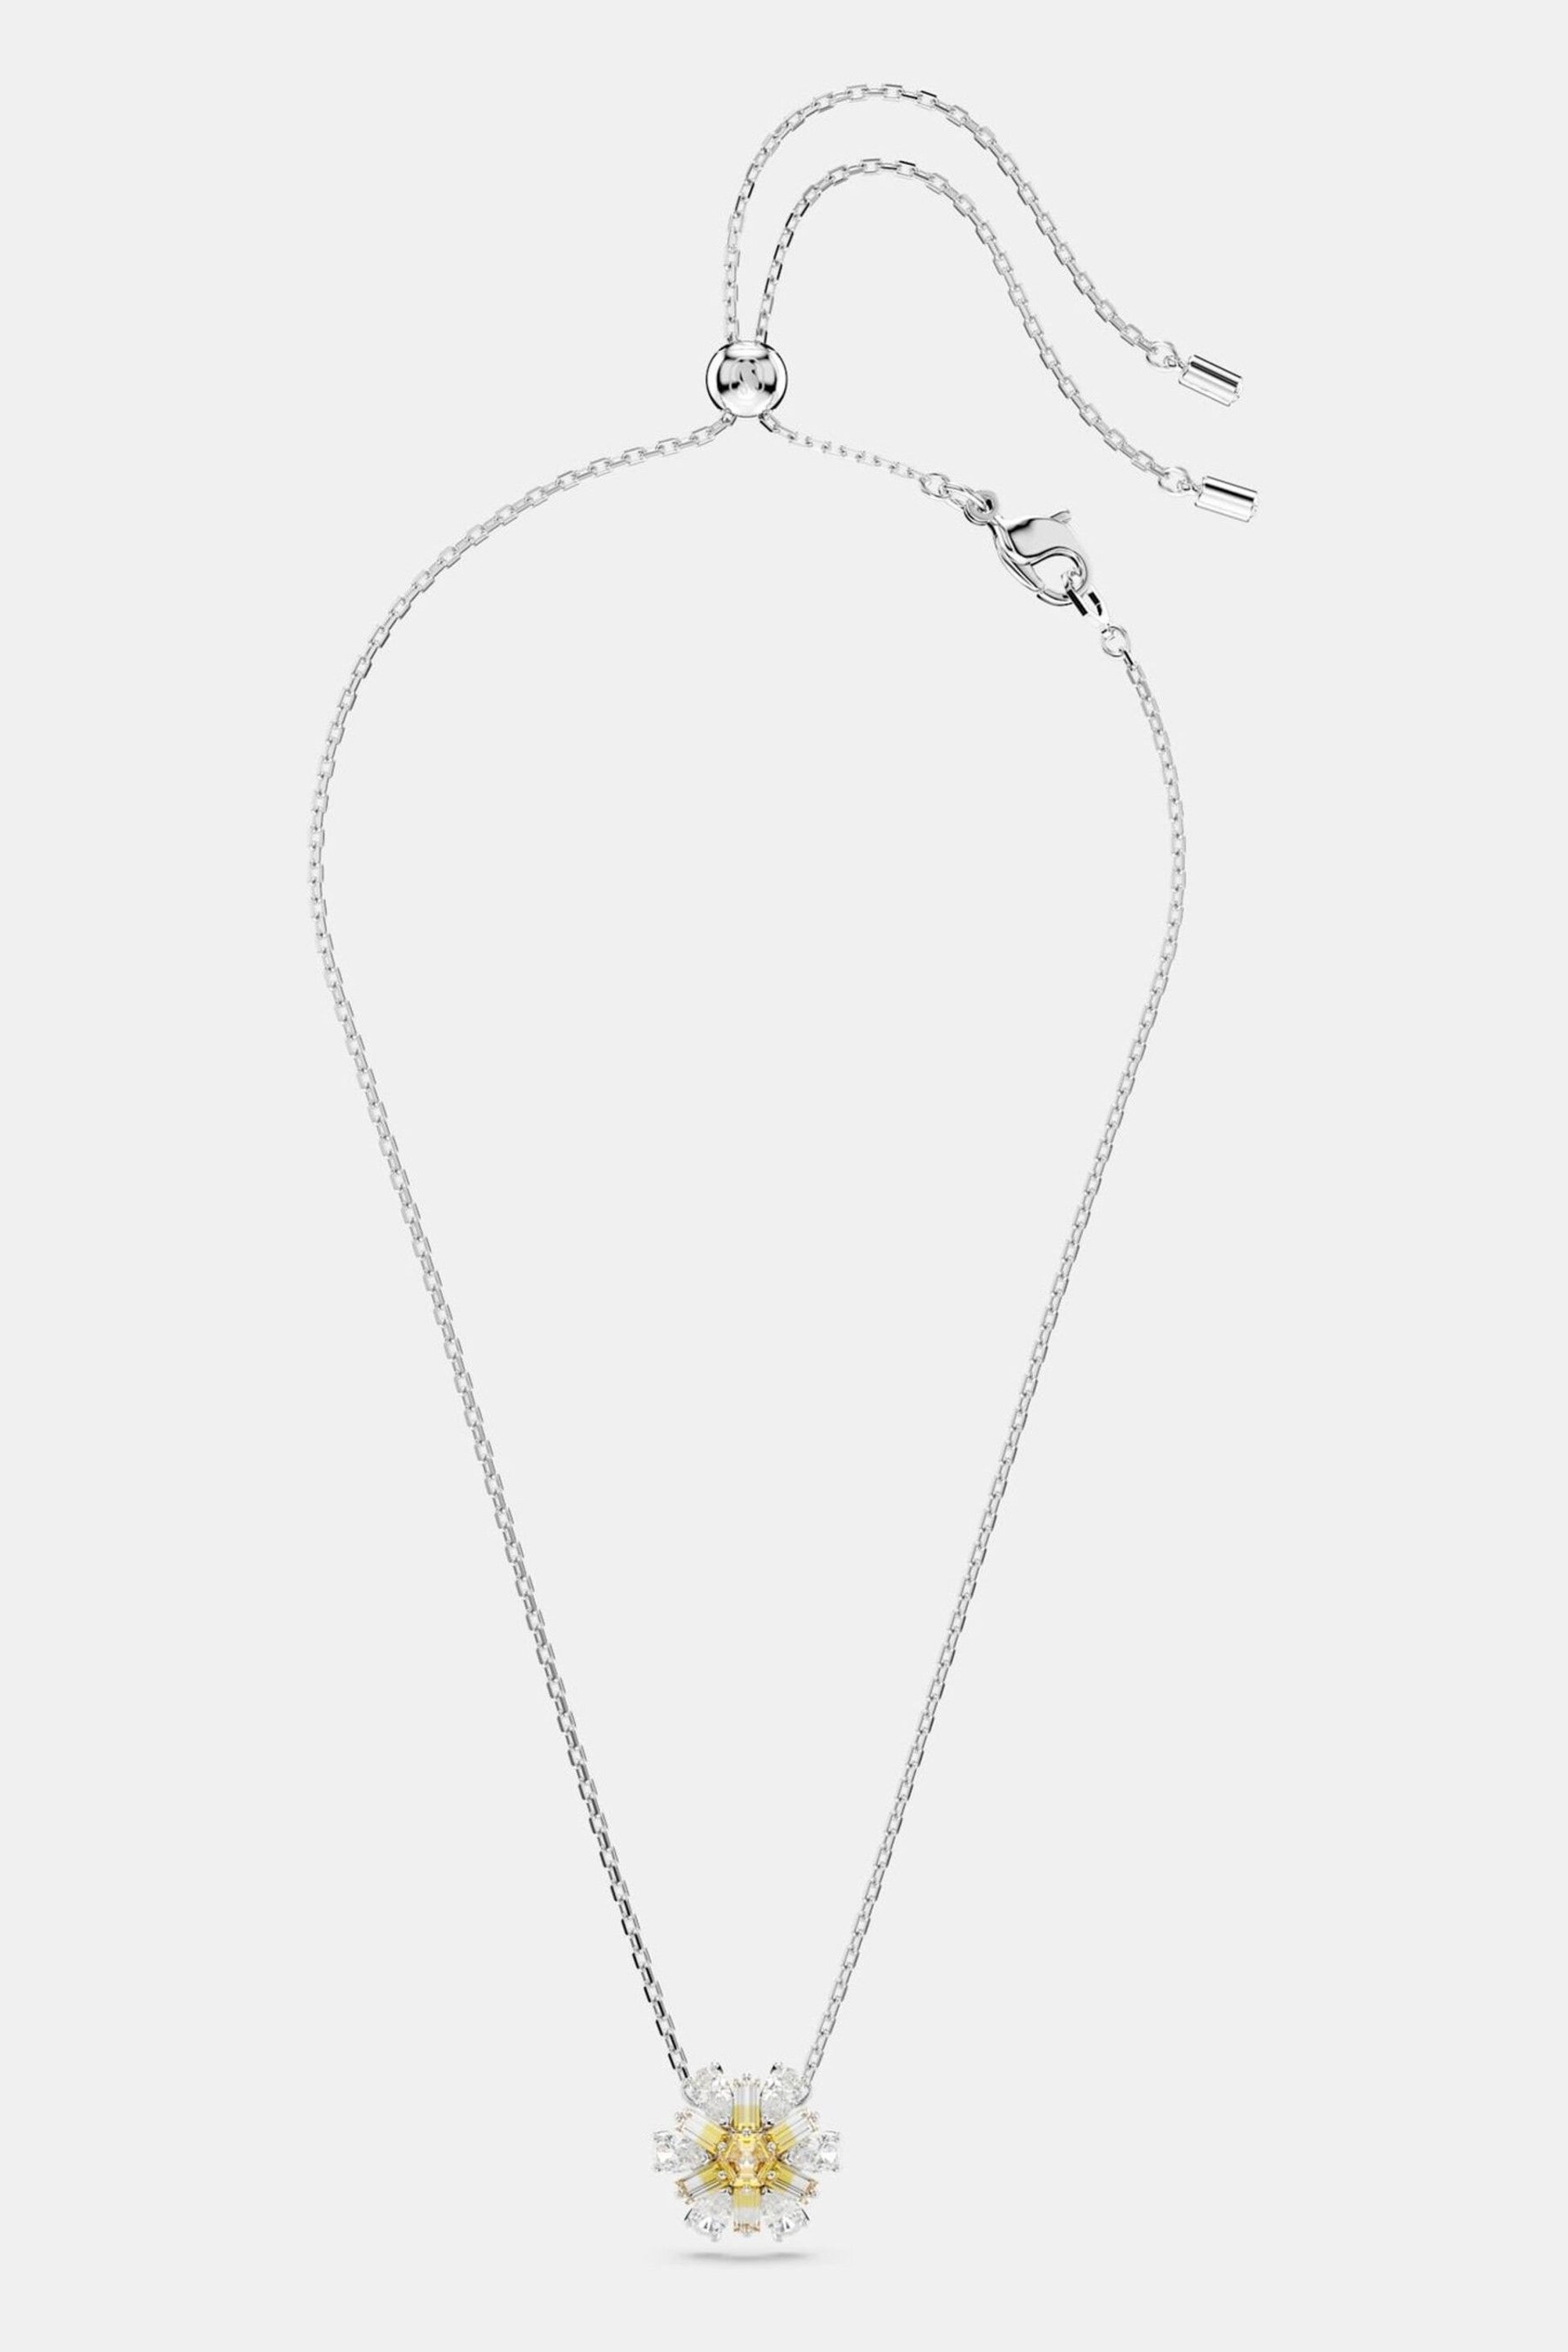 Swarovski Silver Daisy Crystal Necklace - Image 2 of 7